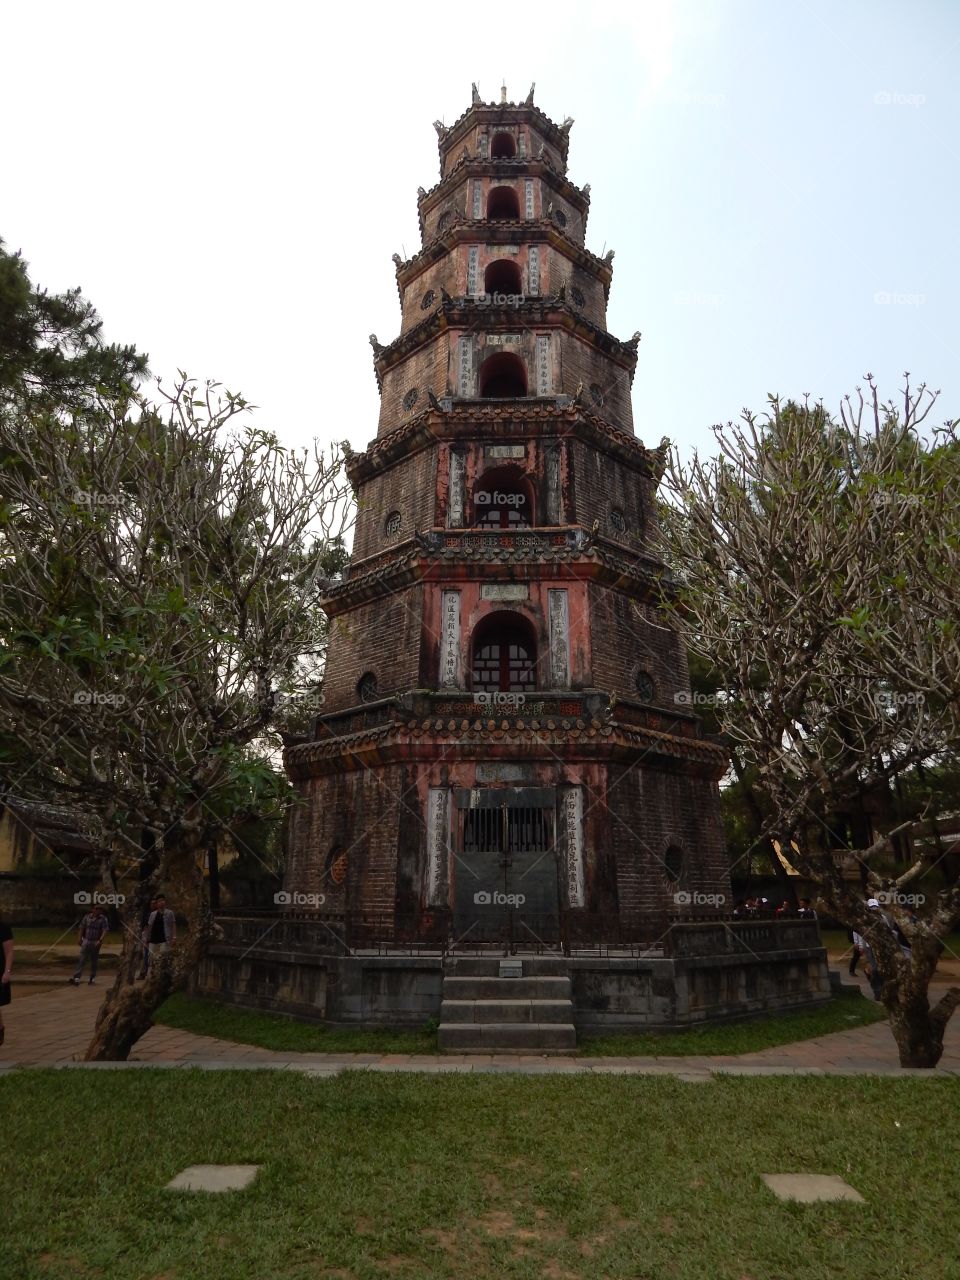 The pagoda in Hue, Vietnam 